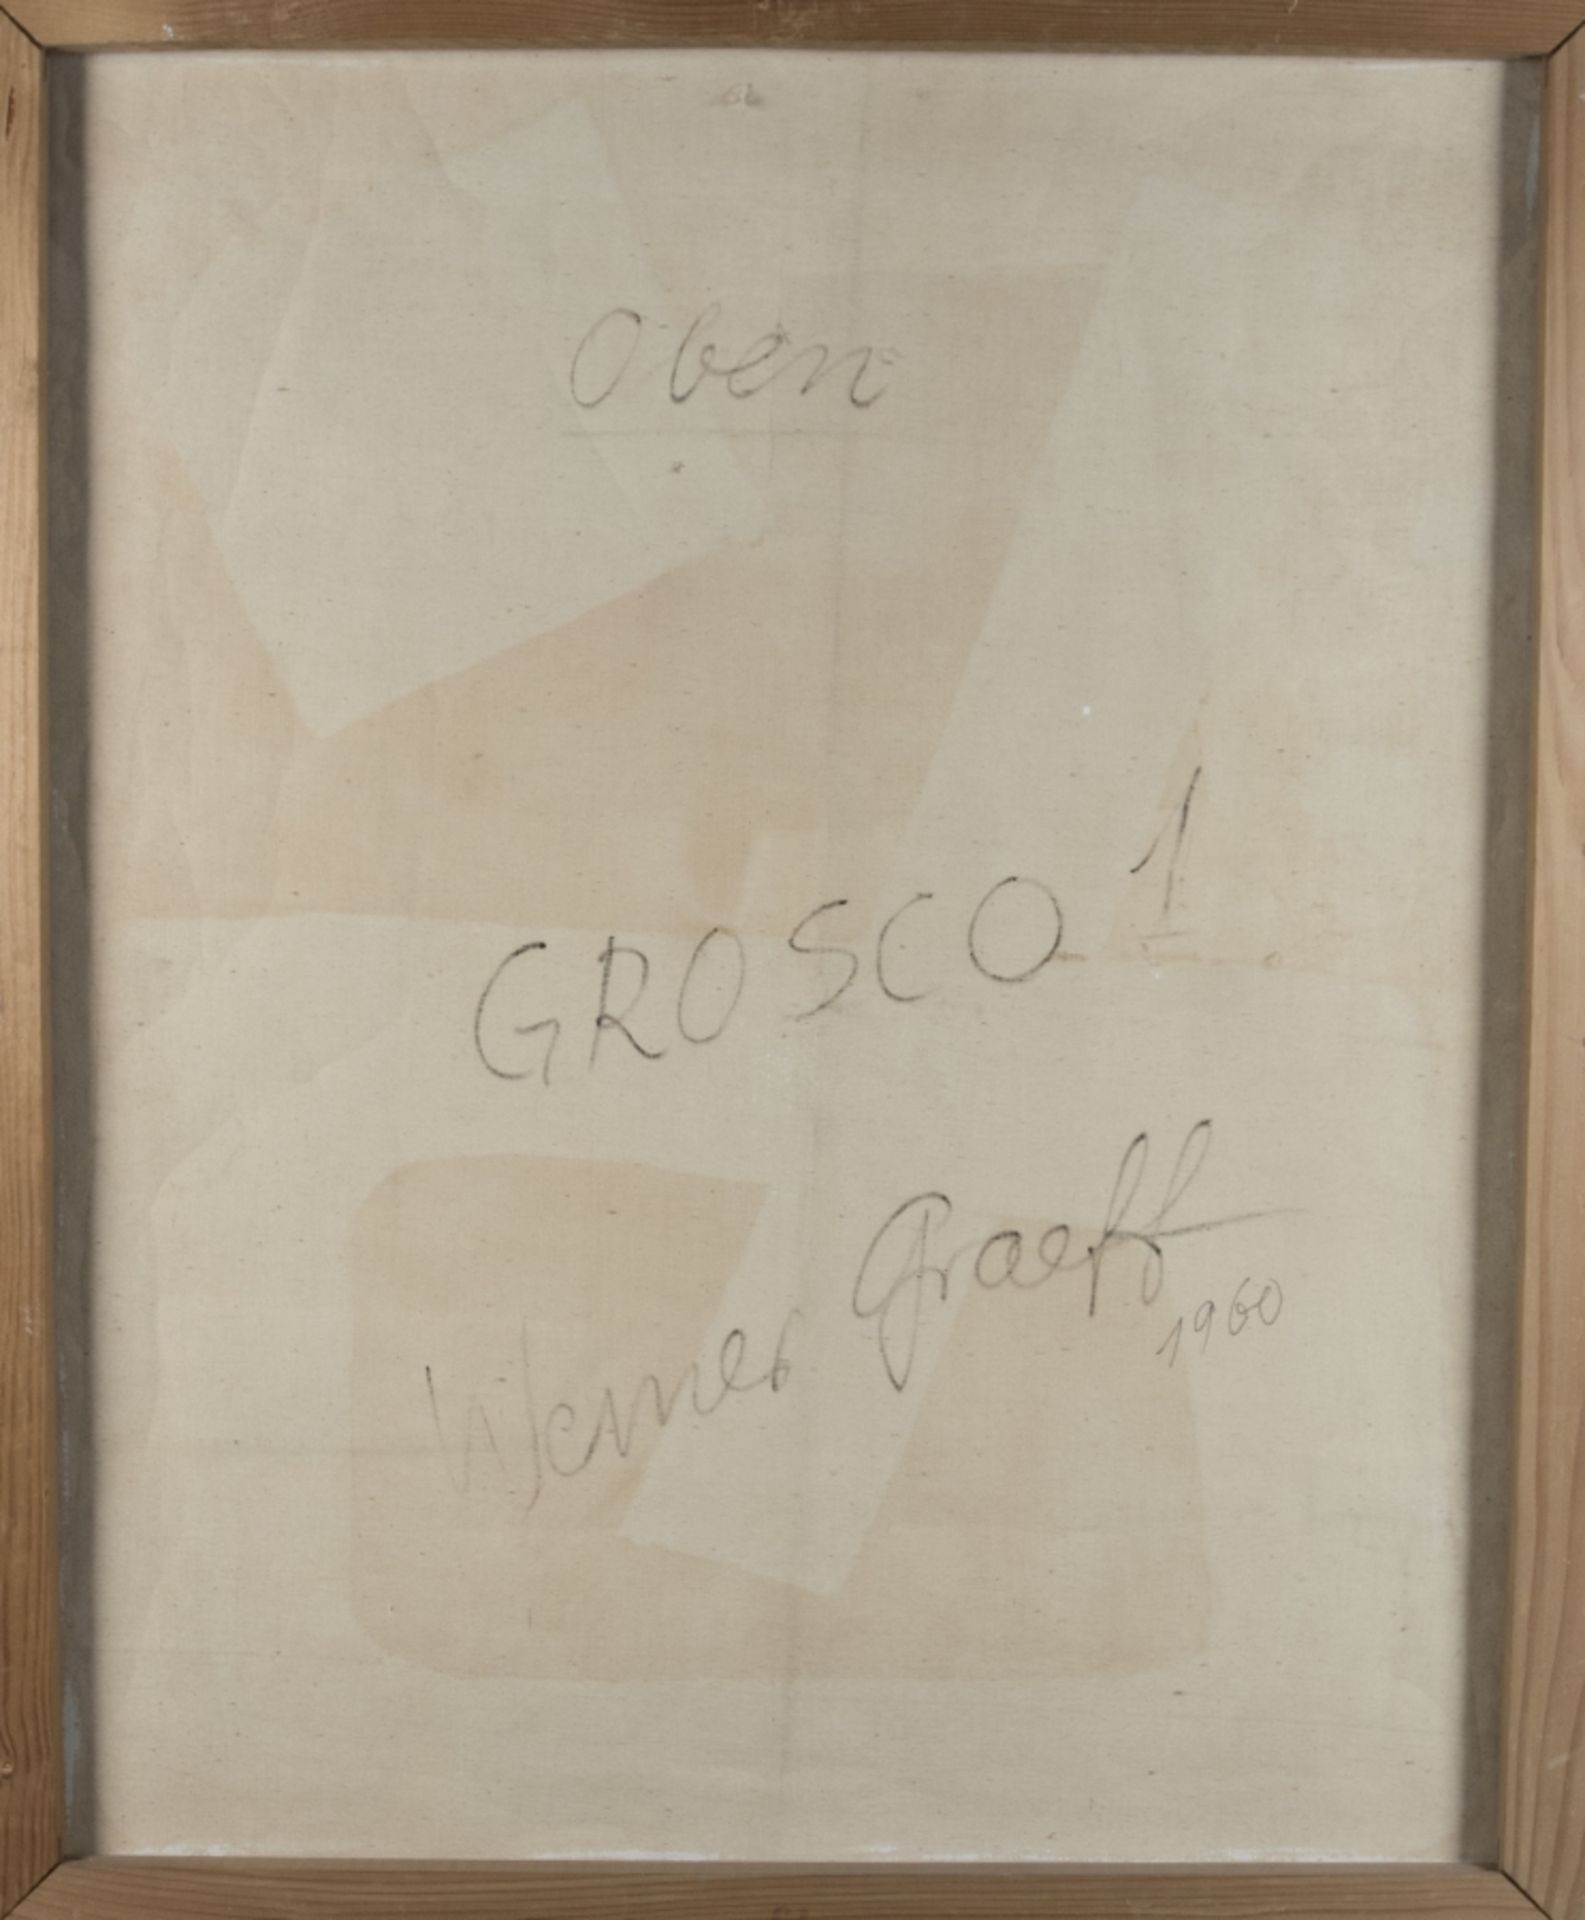 Graeff, Werner: GROSCO 1 - Image 2 of 2